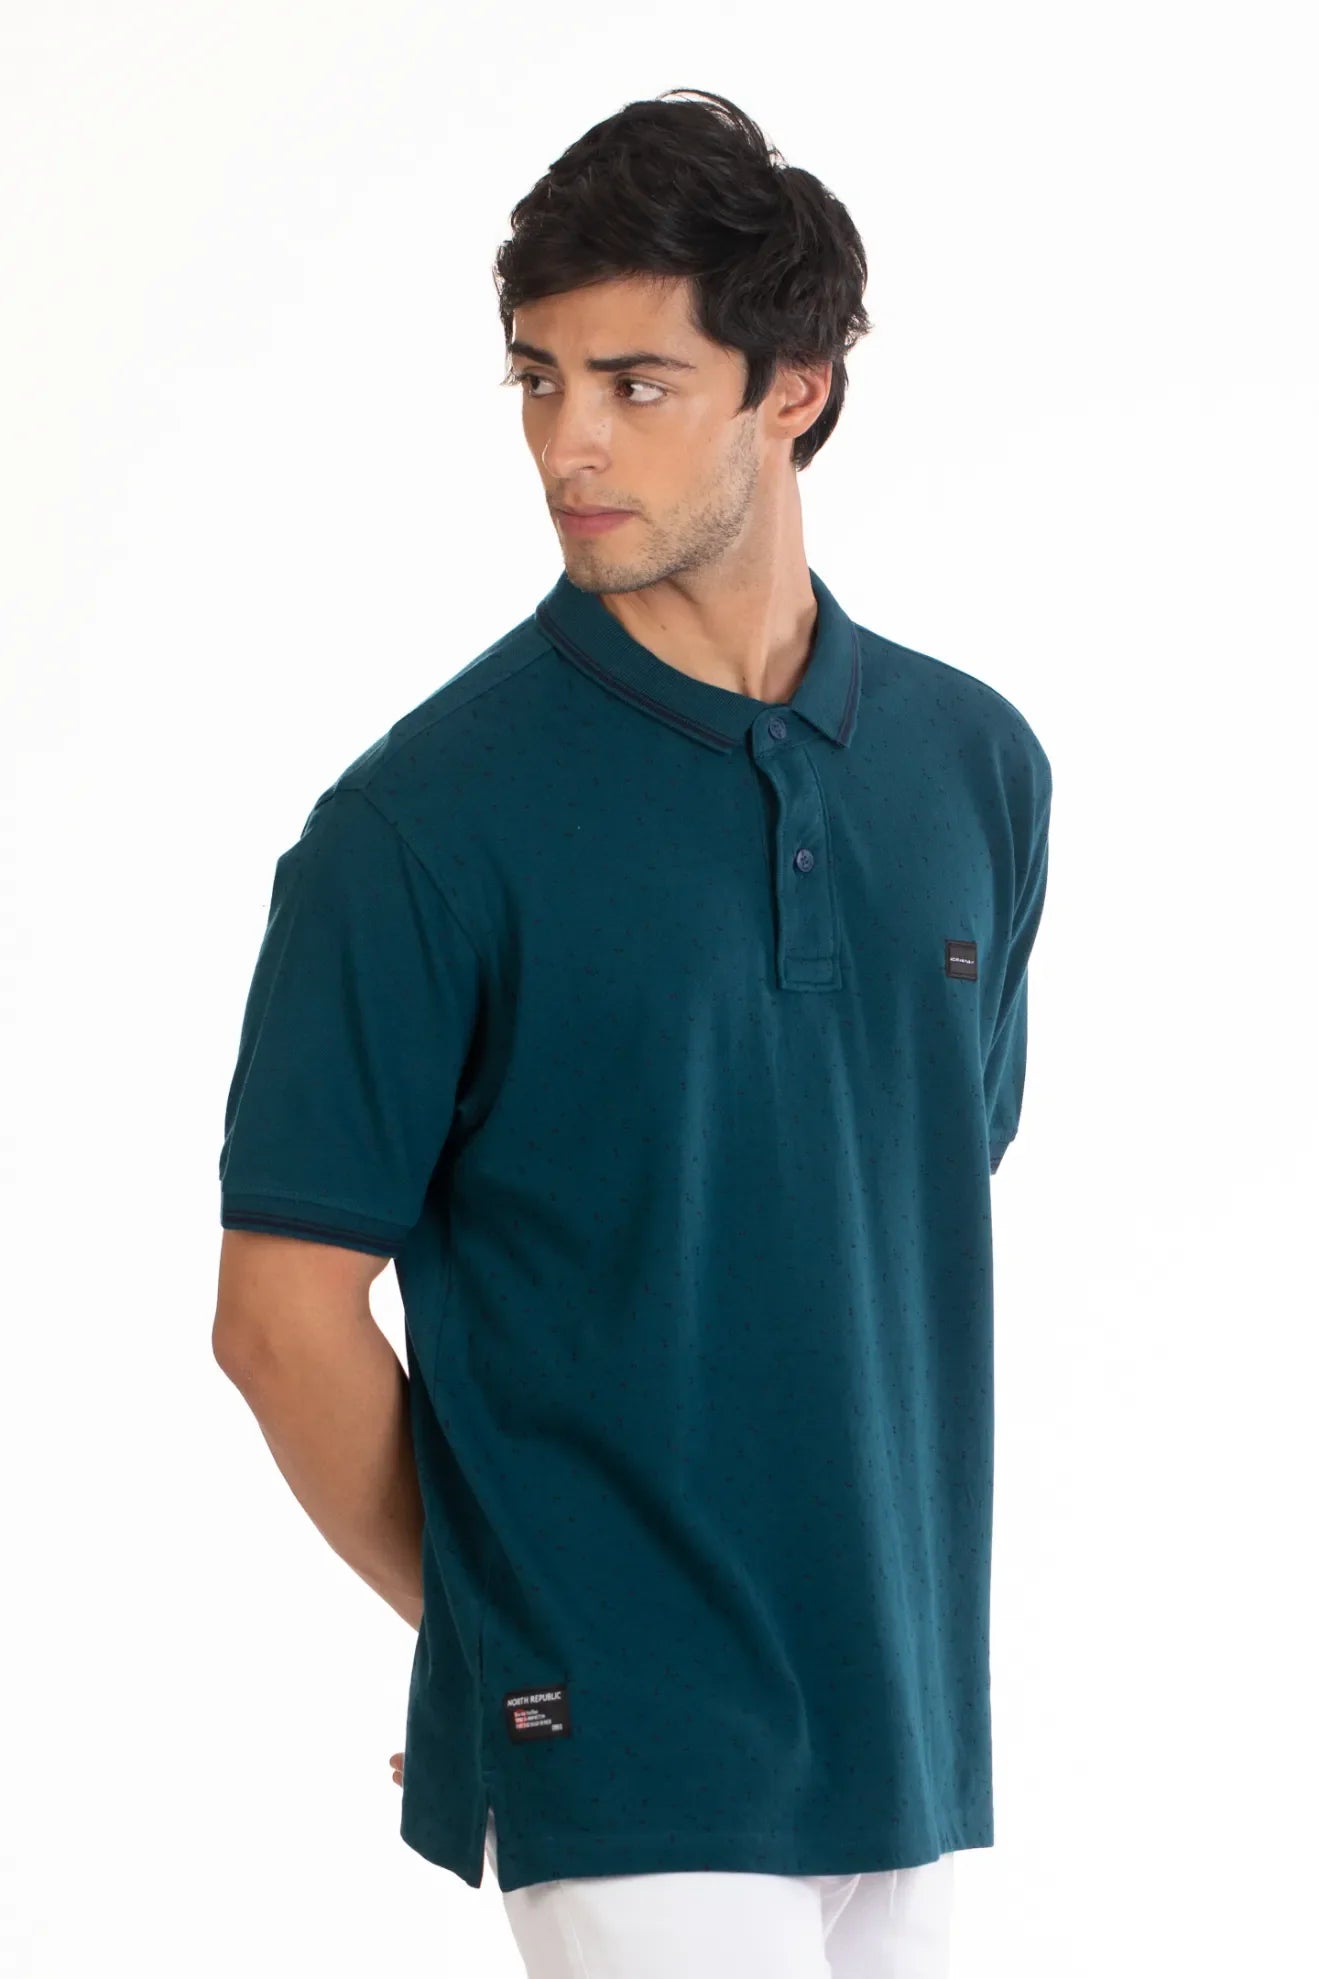 Teal Polo Men's Geo Printed T Shirt